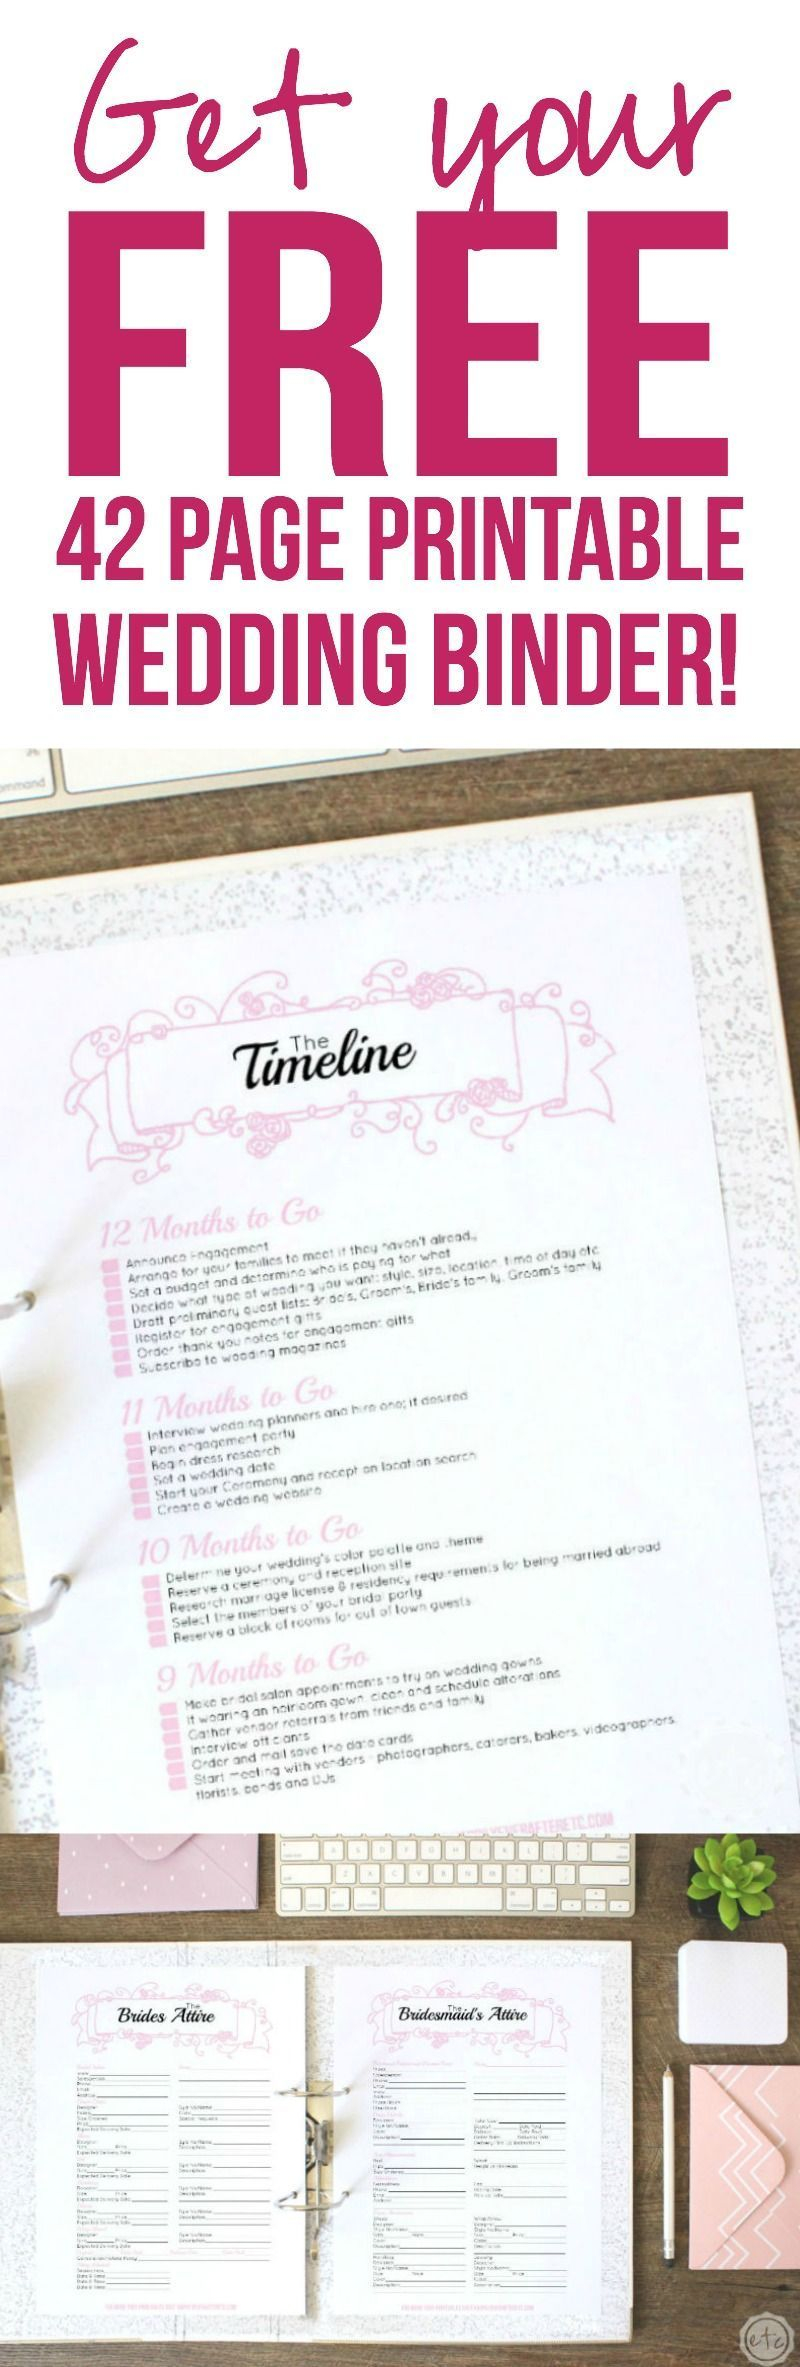 Inspirational Diy Wedding Planner Binder Printables Tutorial Diy